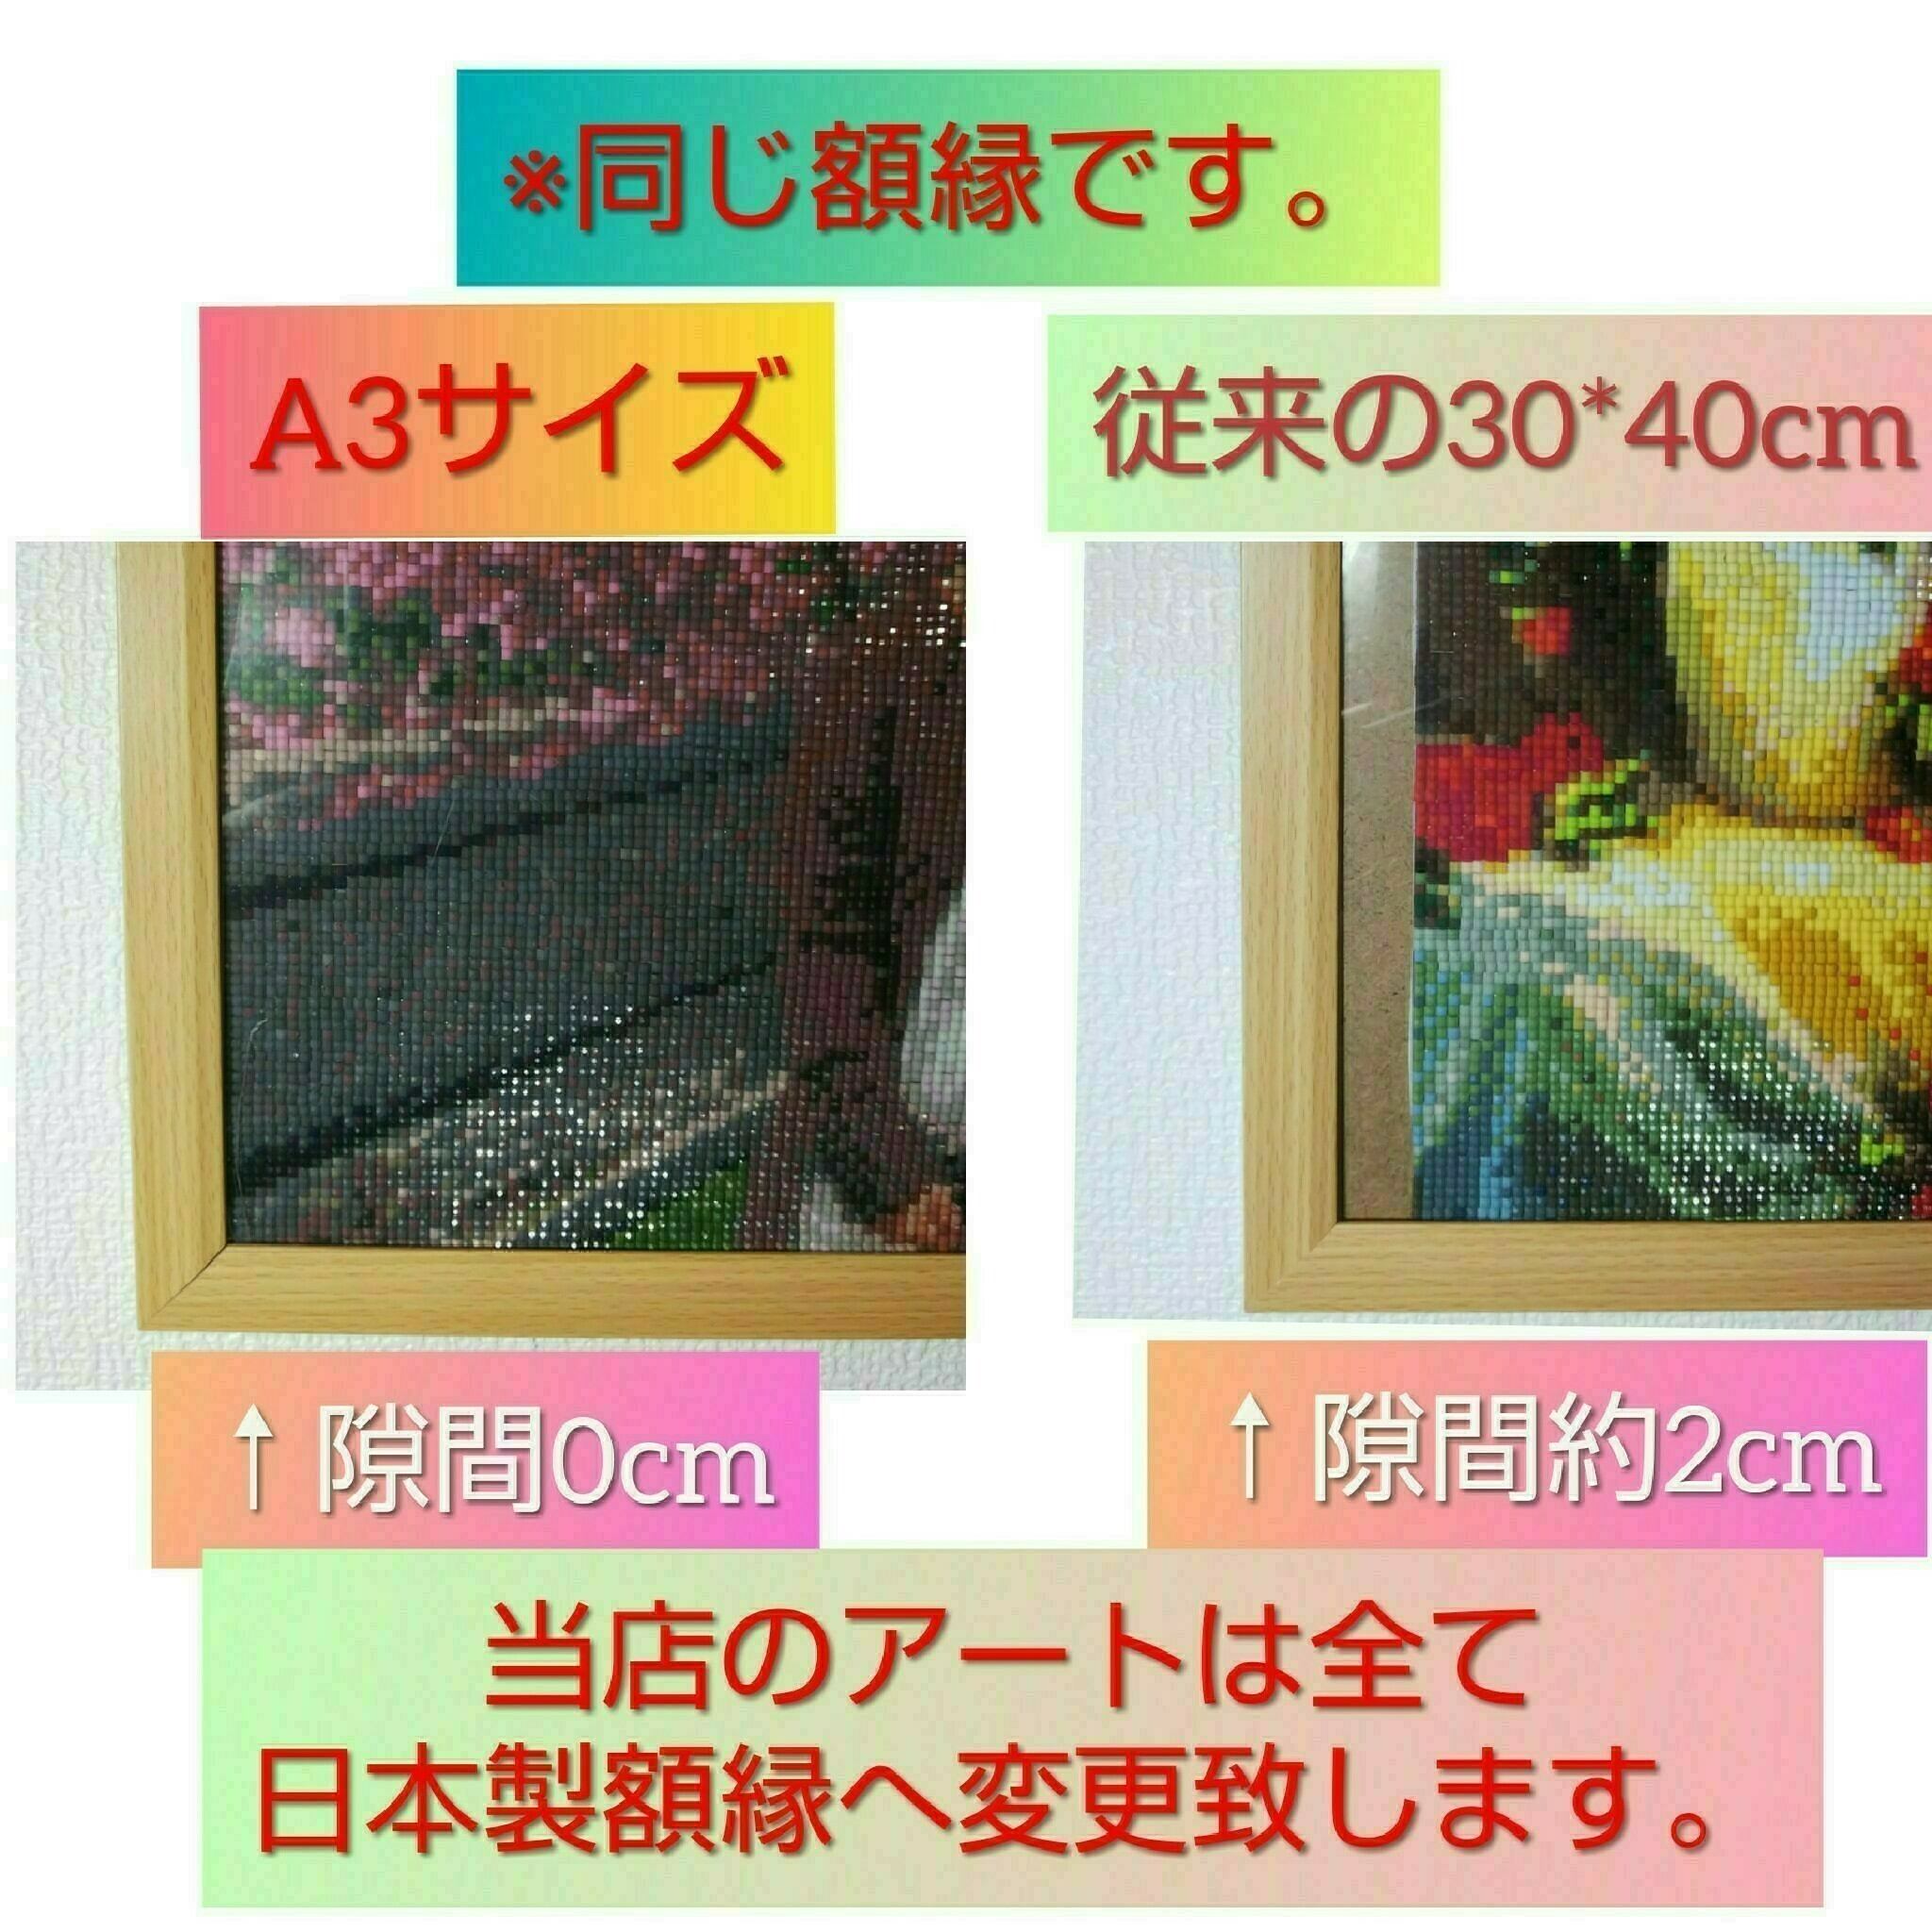 A3サイズ 四角ビーズ【fan-003】フルダイヤモンドアート